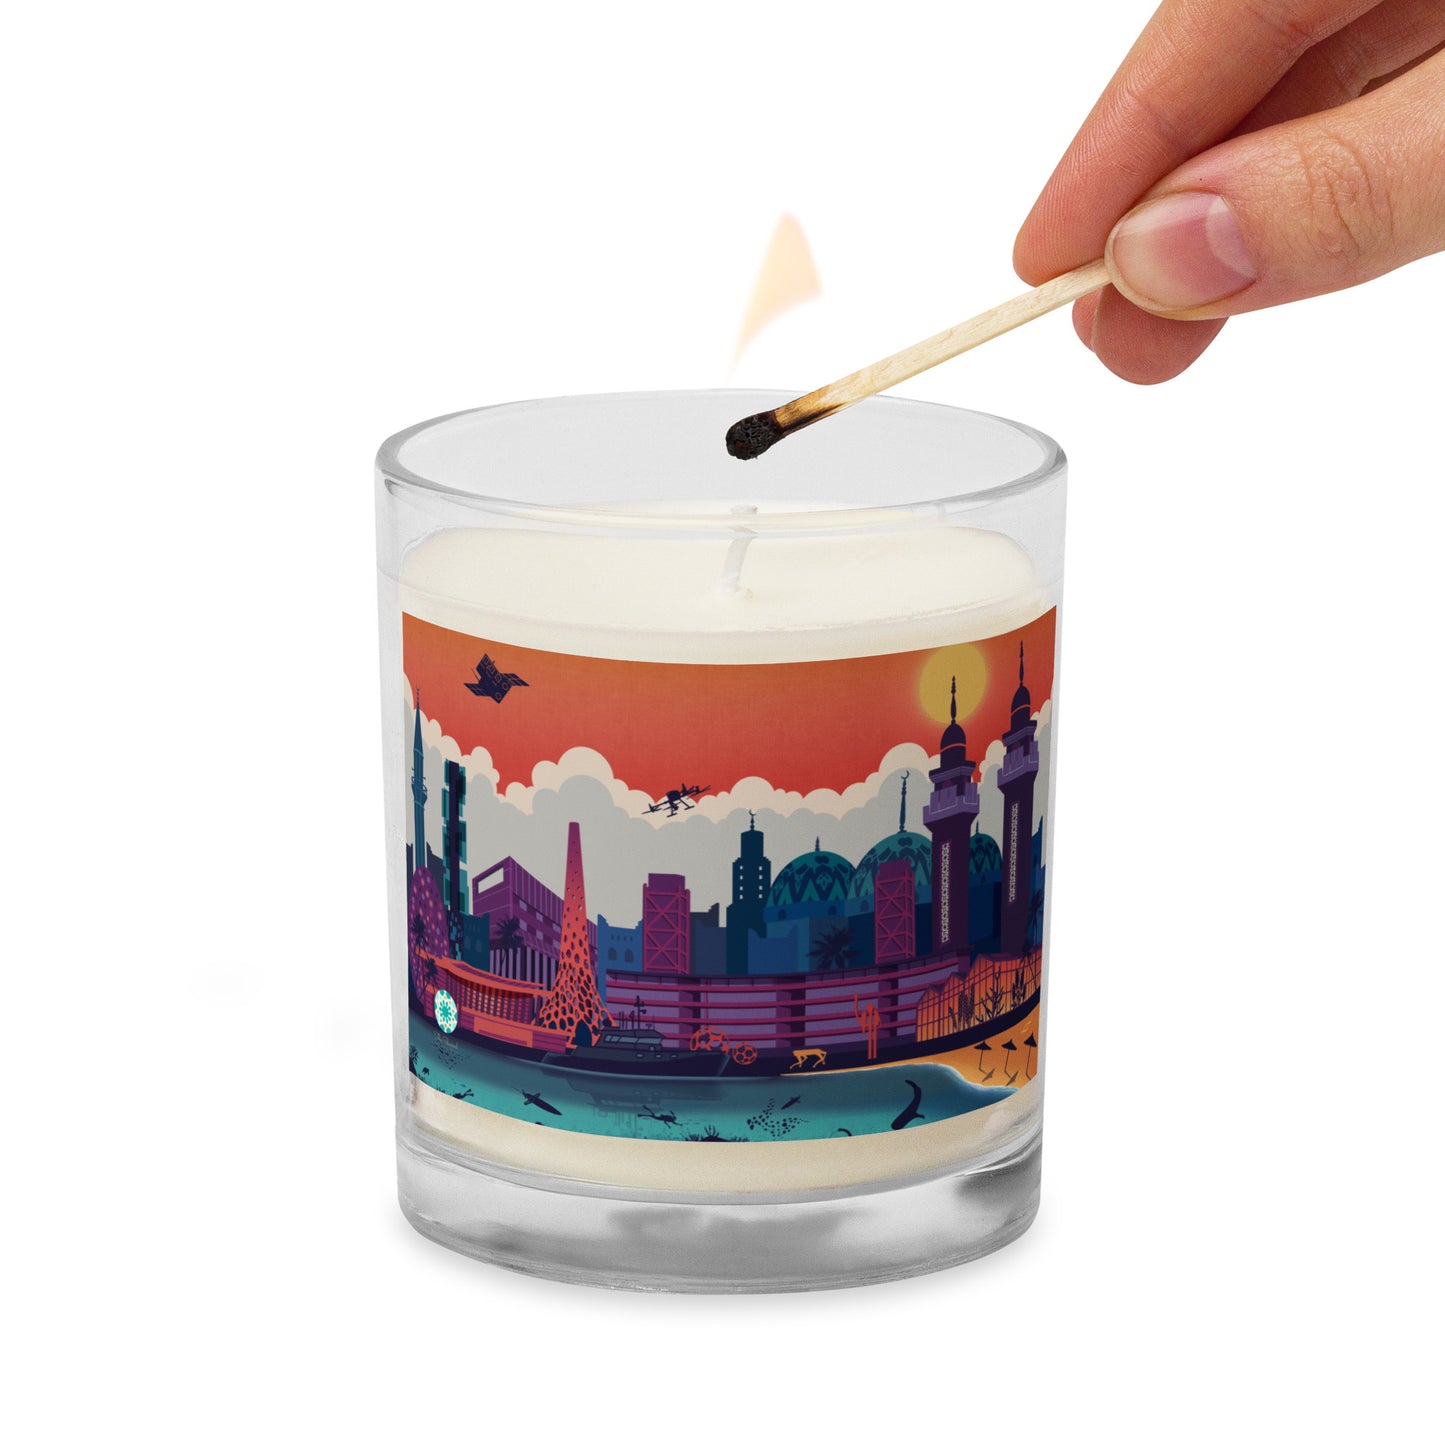 KAUST Skyline Urbanscape soy wax candle